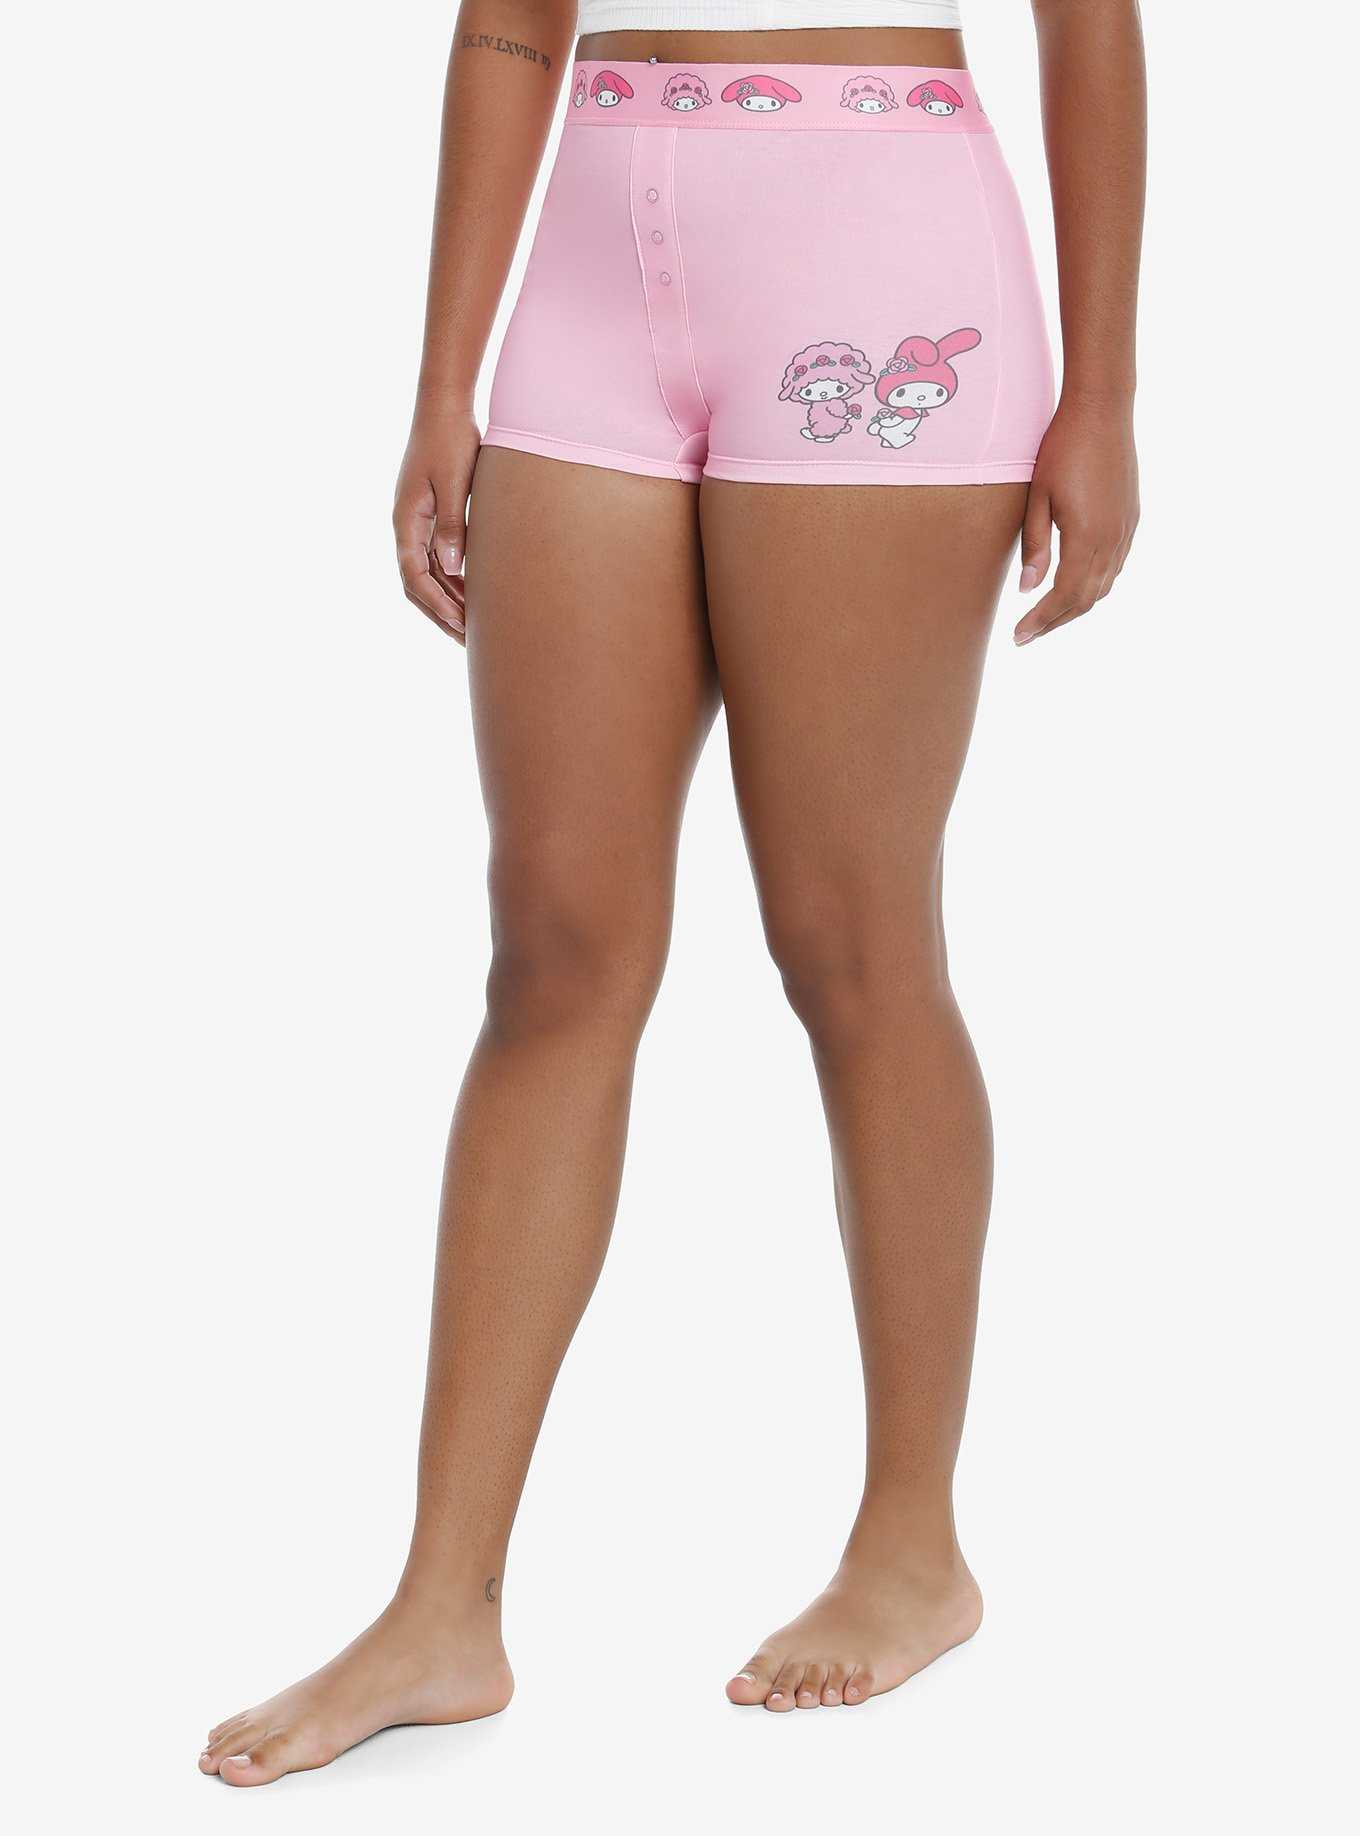 Hello Kitty Adults Beach Shorts Boxers Shorts Wear-Black Size M-XL Sanrio